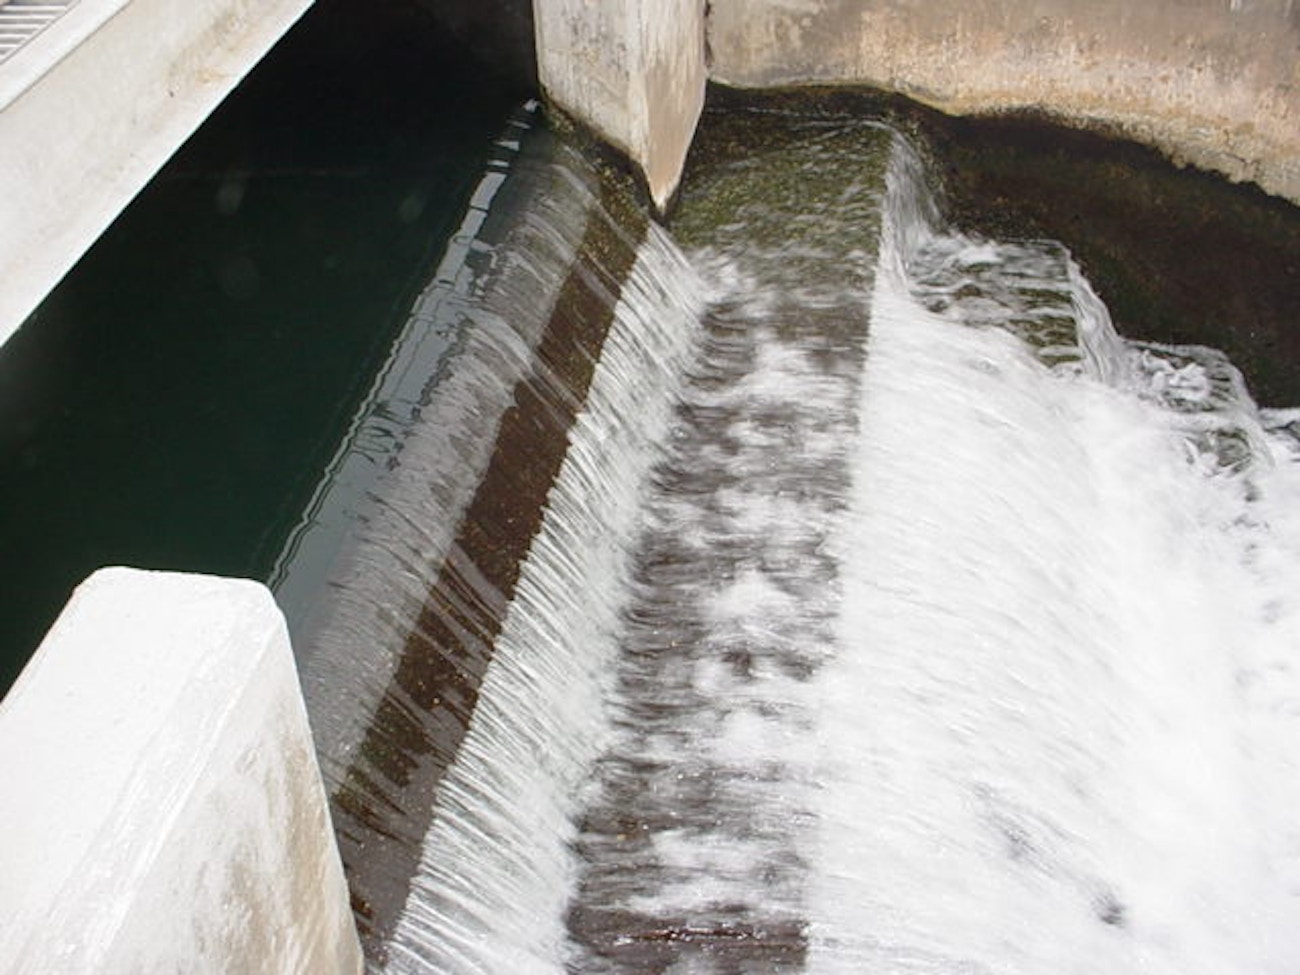                         Lamesa Wastewater Treatment Plant
                    